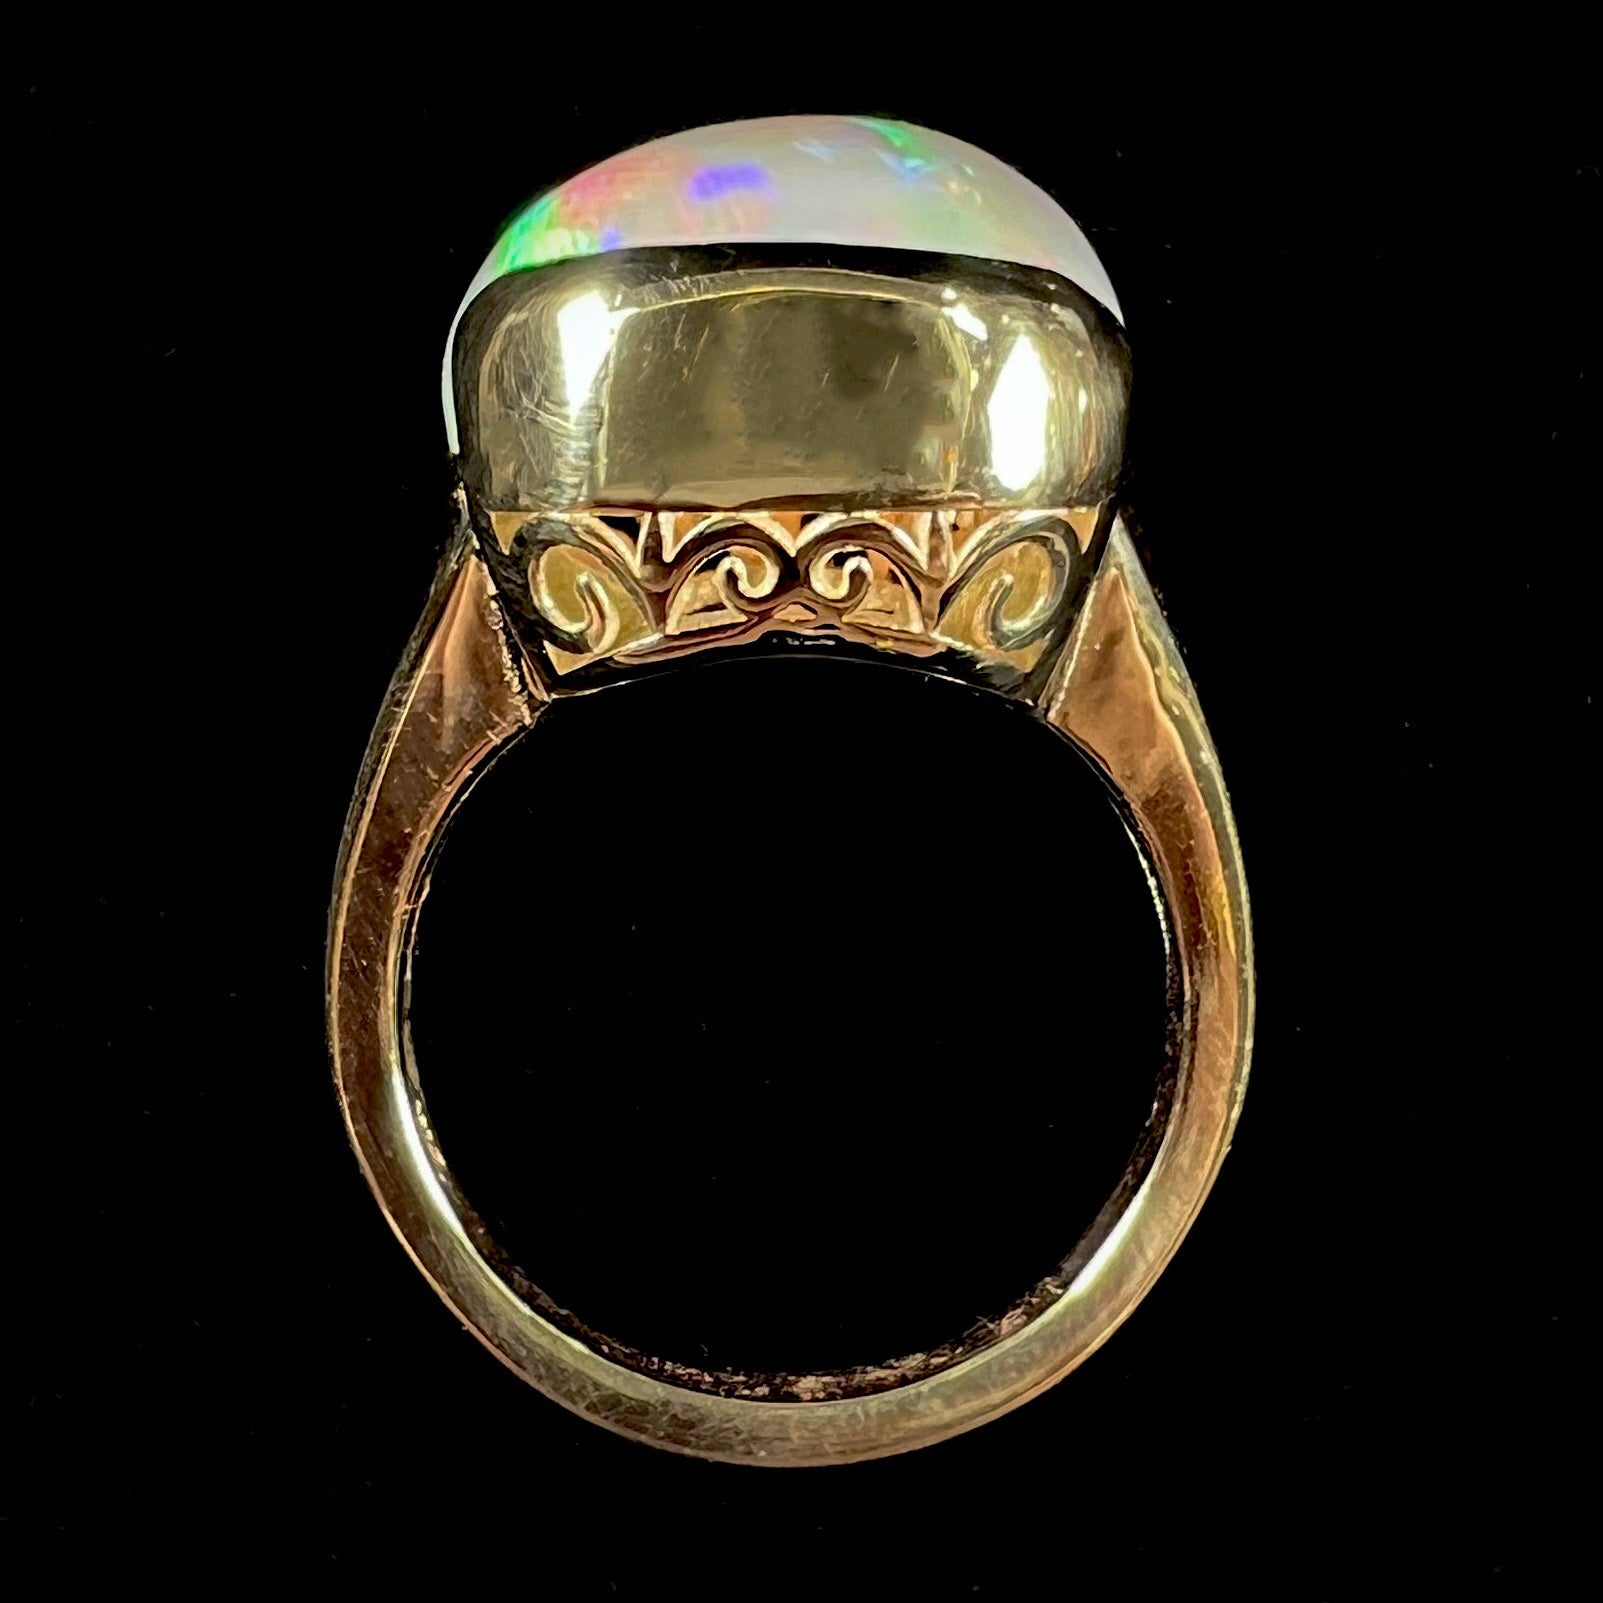 A ladies' yellow gold split shank ring half-bezel set with a barrel cabochon cut natural Ethiopian fire opal stone.